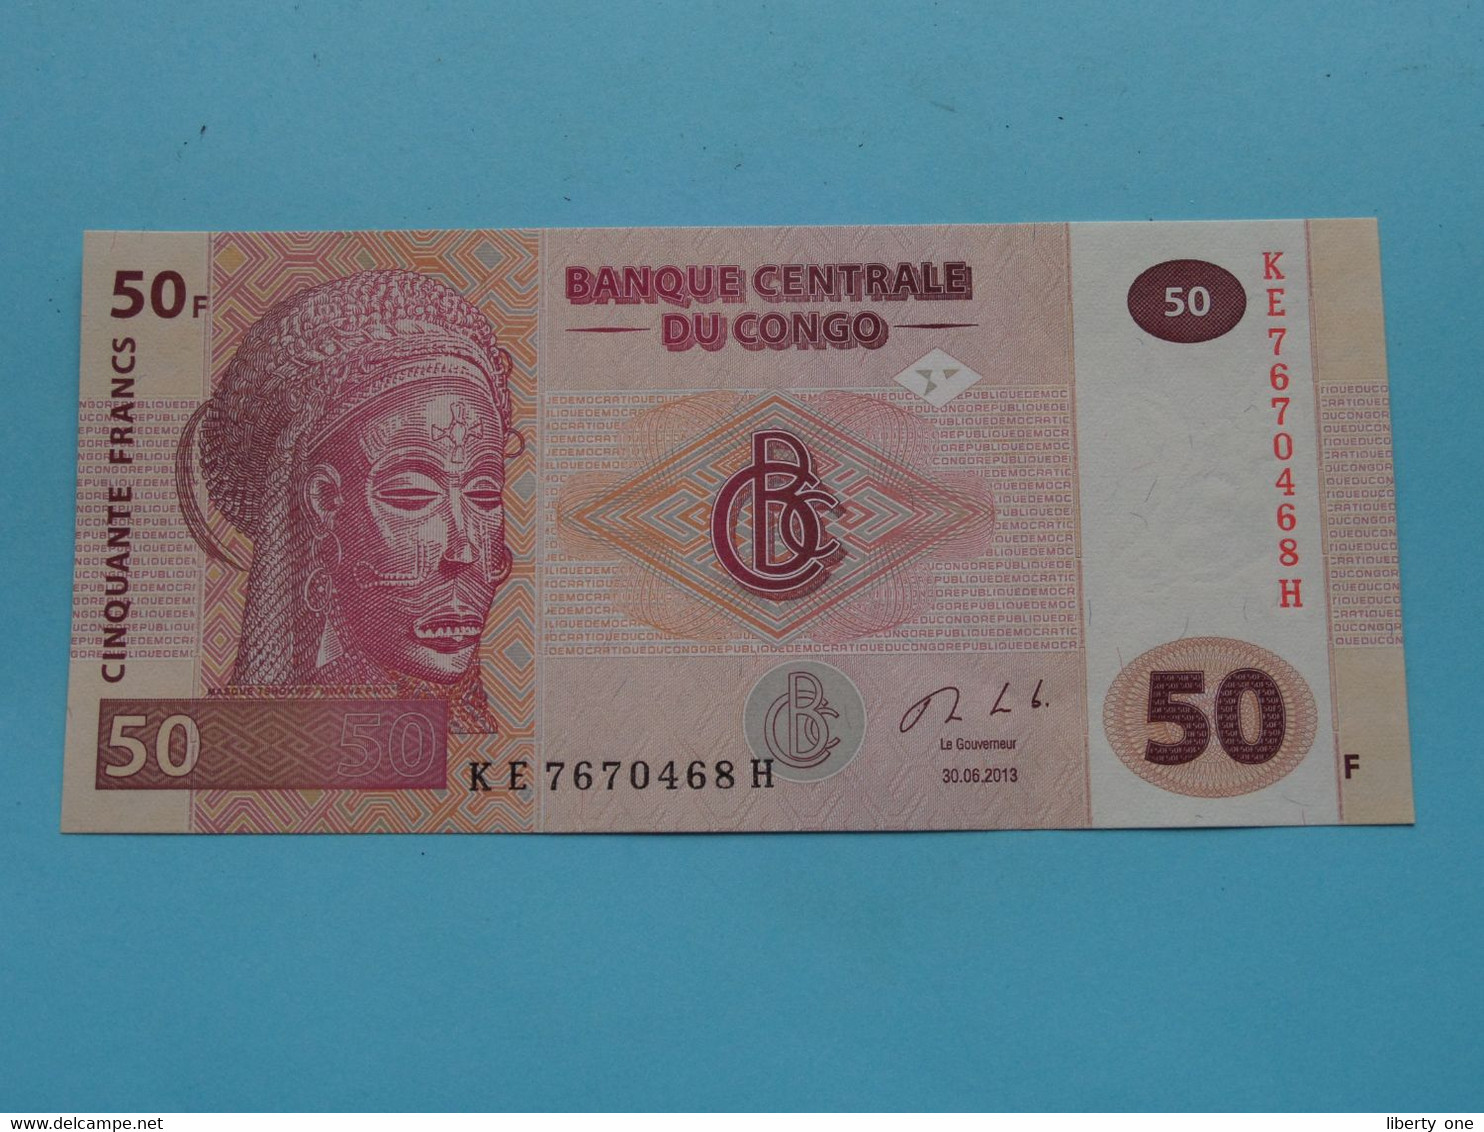 50 ( Cinquante ) Francs ( KE7670468H ) 2013 > Banque Centrale Du CONGO ( For Grade, Please See Photo ) UNC ! - Republic Of Congo (Congo-Brazzaville)